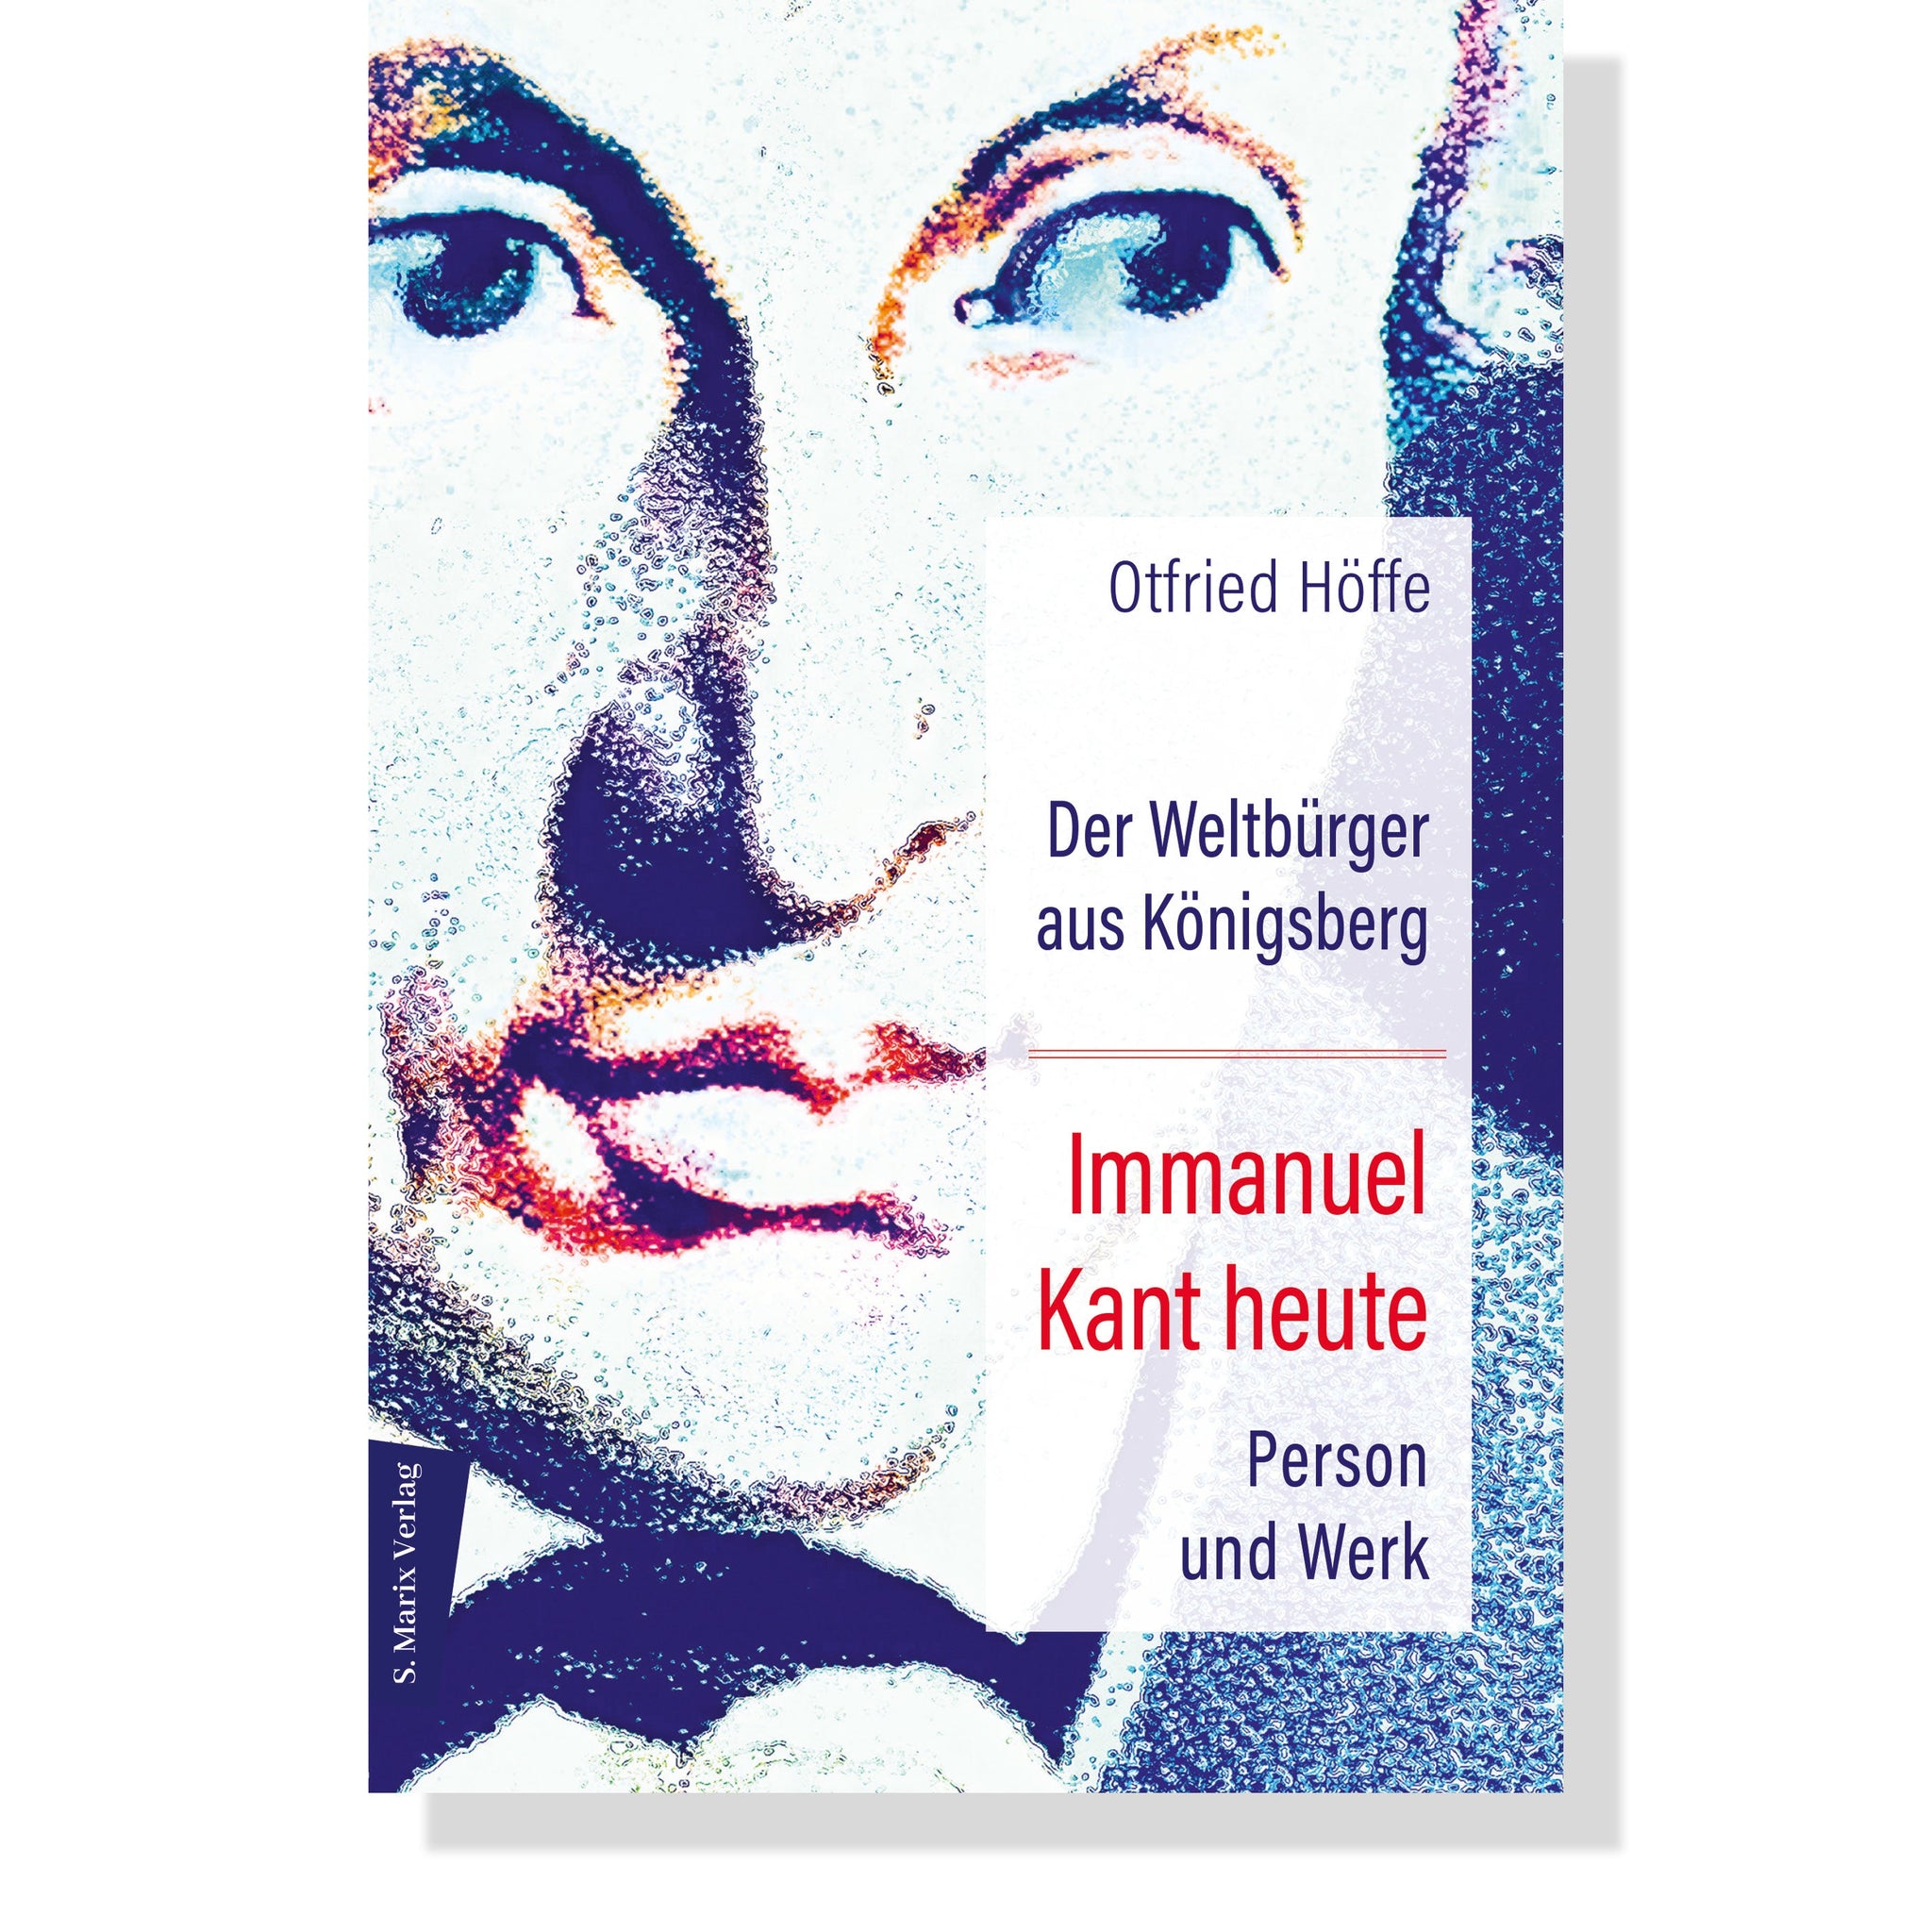 Der Weltbürger aus Königsberg - Immanuel Kant heute